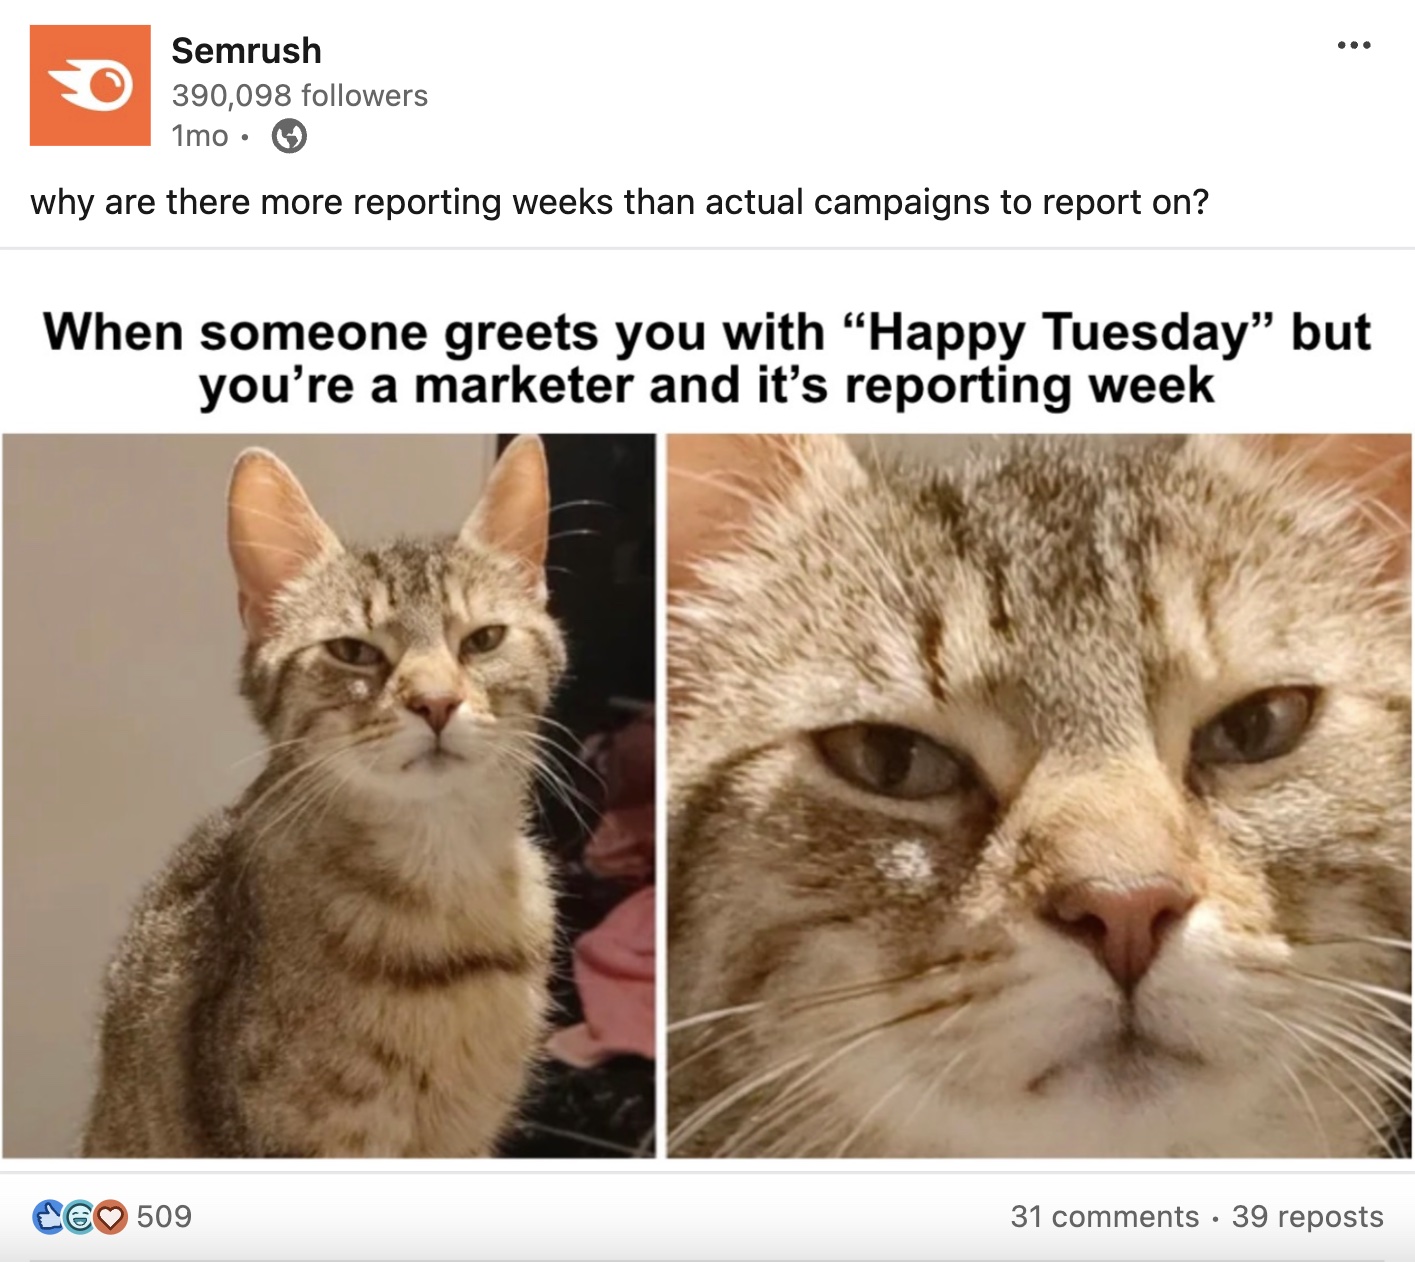 Semrush's post on LinkedIn, joking about marketers' reporting week